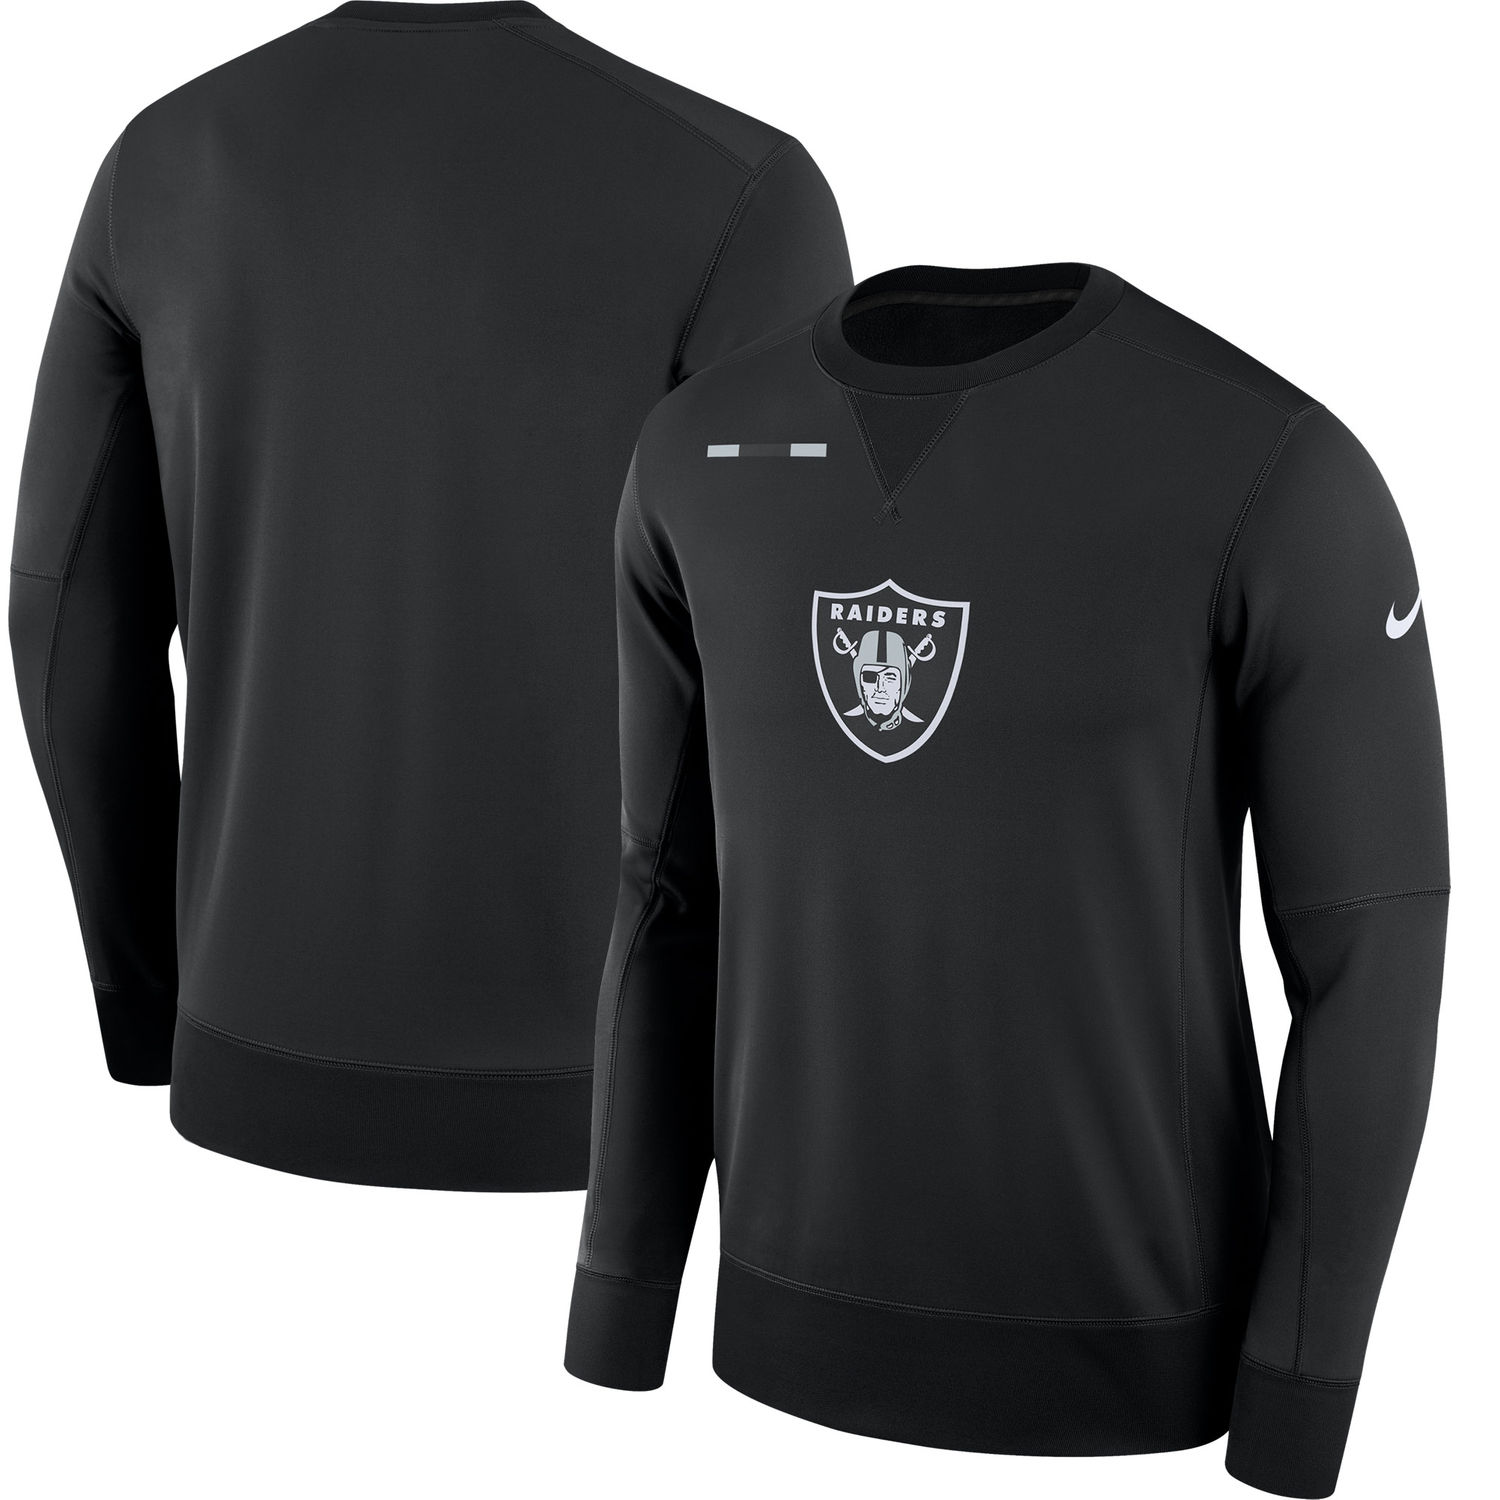 Mens Oakland Raiders Nike Black Sideline Team Logo Performance Sweatshirt